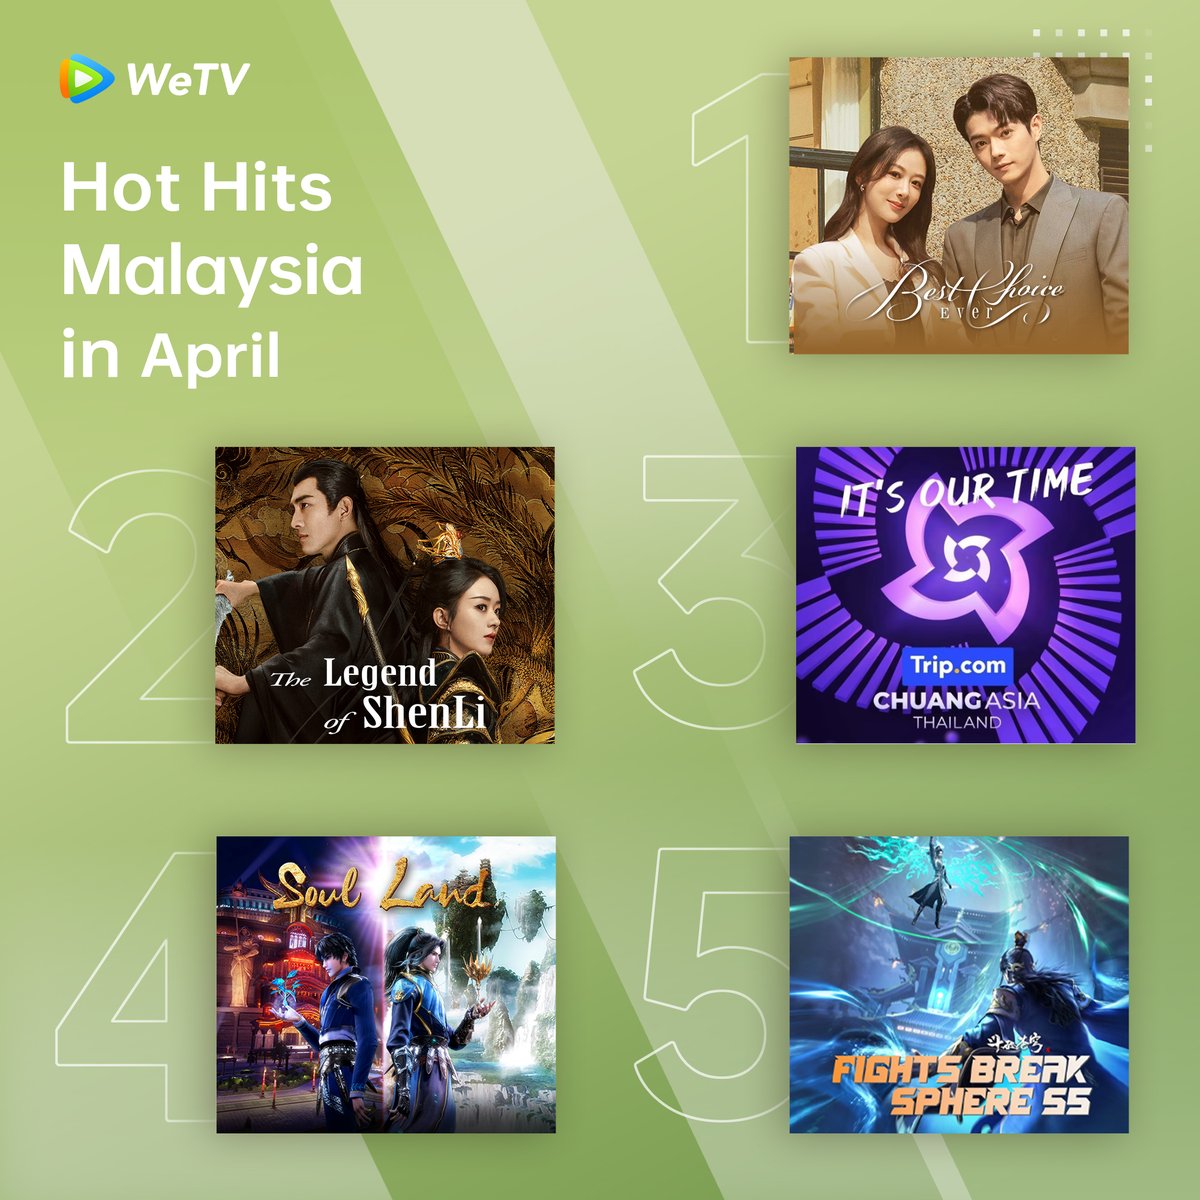 #WeTV Malaysia Hot Hits in April🔥

#BestChoiceEver #承欢记
#TheLegendofShenLi #与凤行
#CHUANGAsia #CHUANGAsia2024
#SoulLand #斗罗大陆
#FightsBreakSphereS5 #斗破苍穹年番

#WeTVRanking
#WeTVAlwaysMore